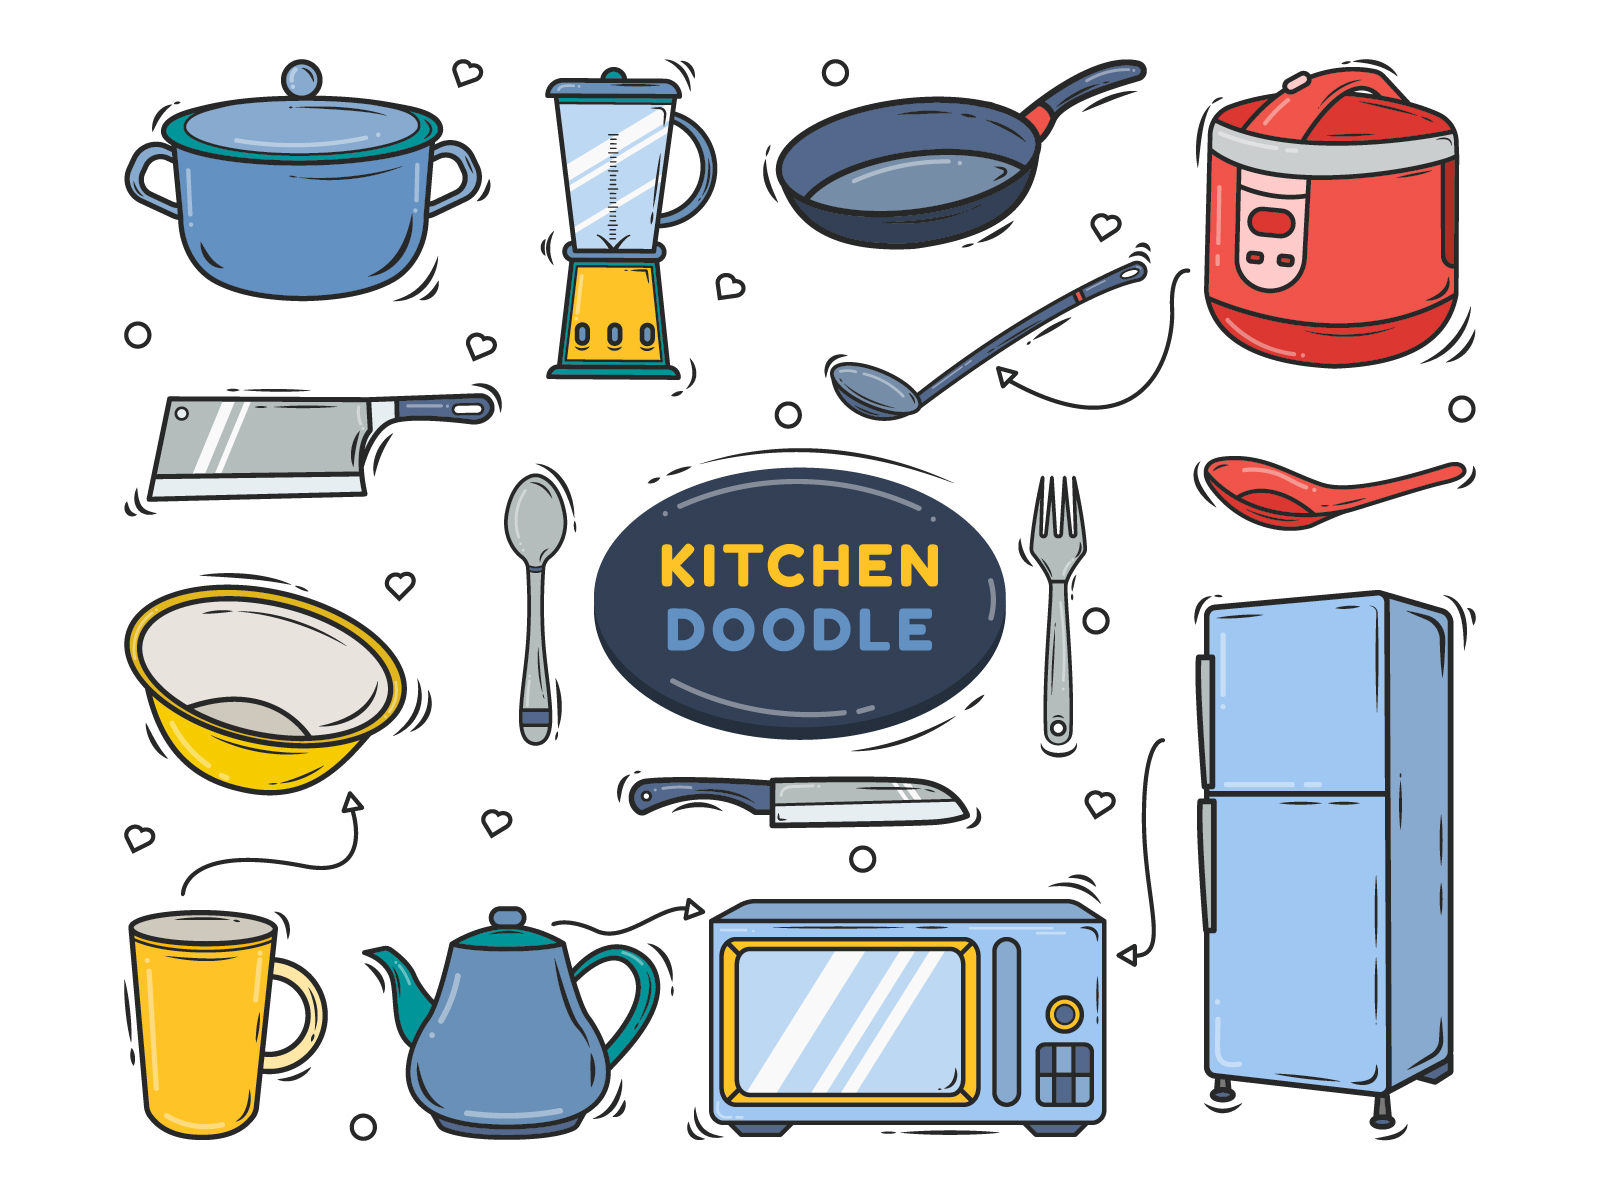 Kitchen tools cartoon doodle set by Fatur Wijaya on Dribbble